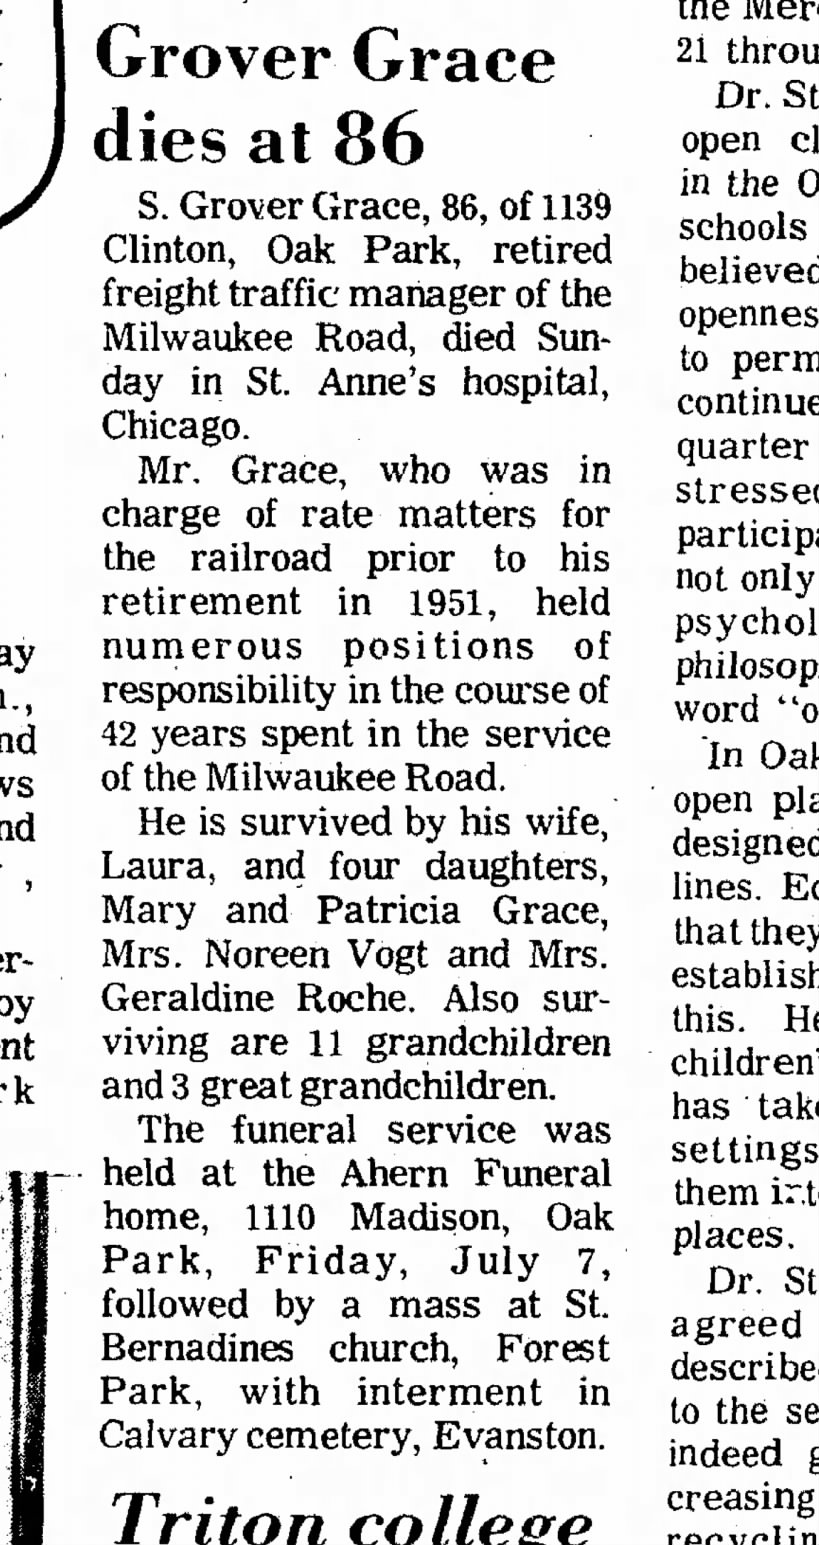 NEWS JOURNAL, CHICAGO, 16 JUL 1972.